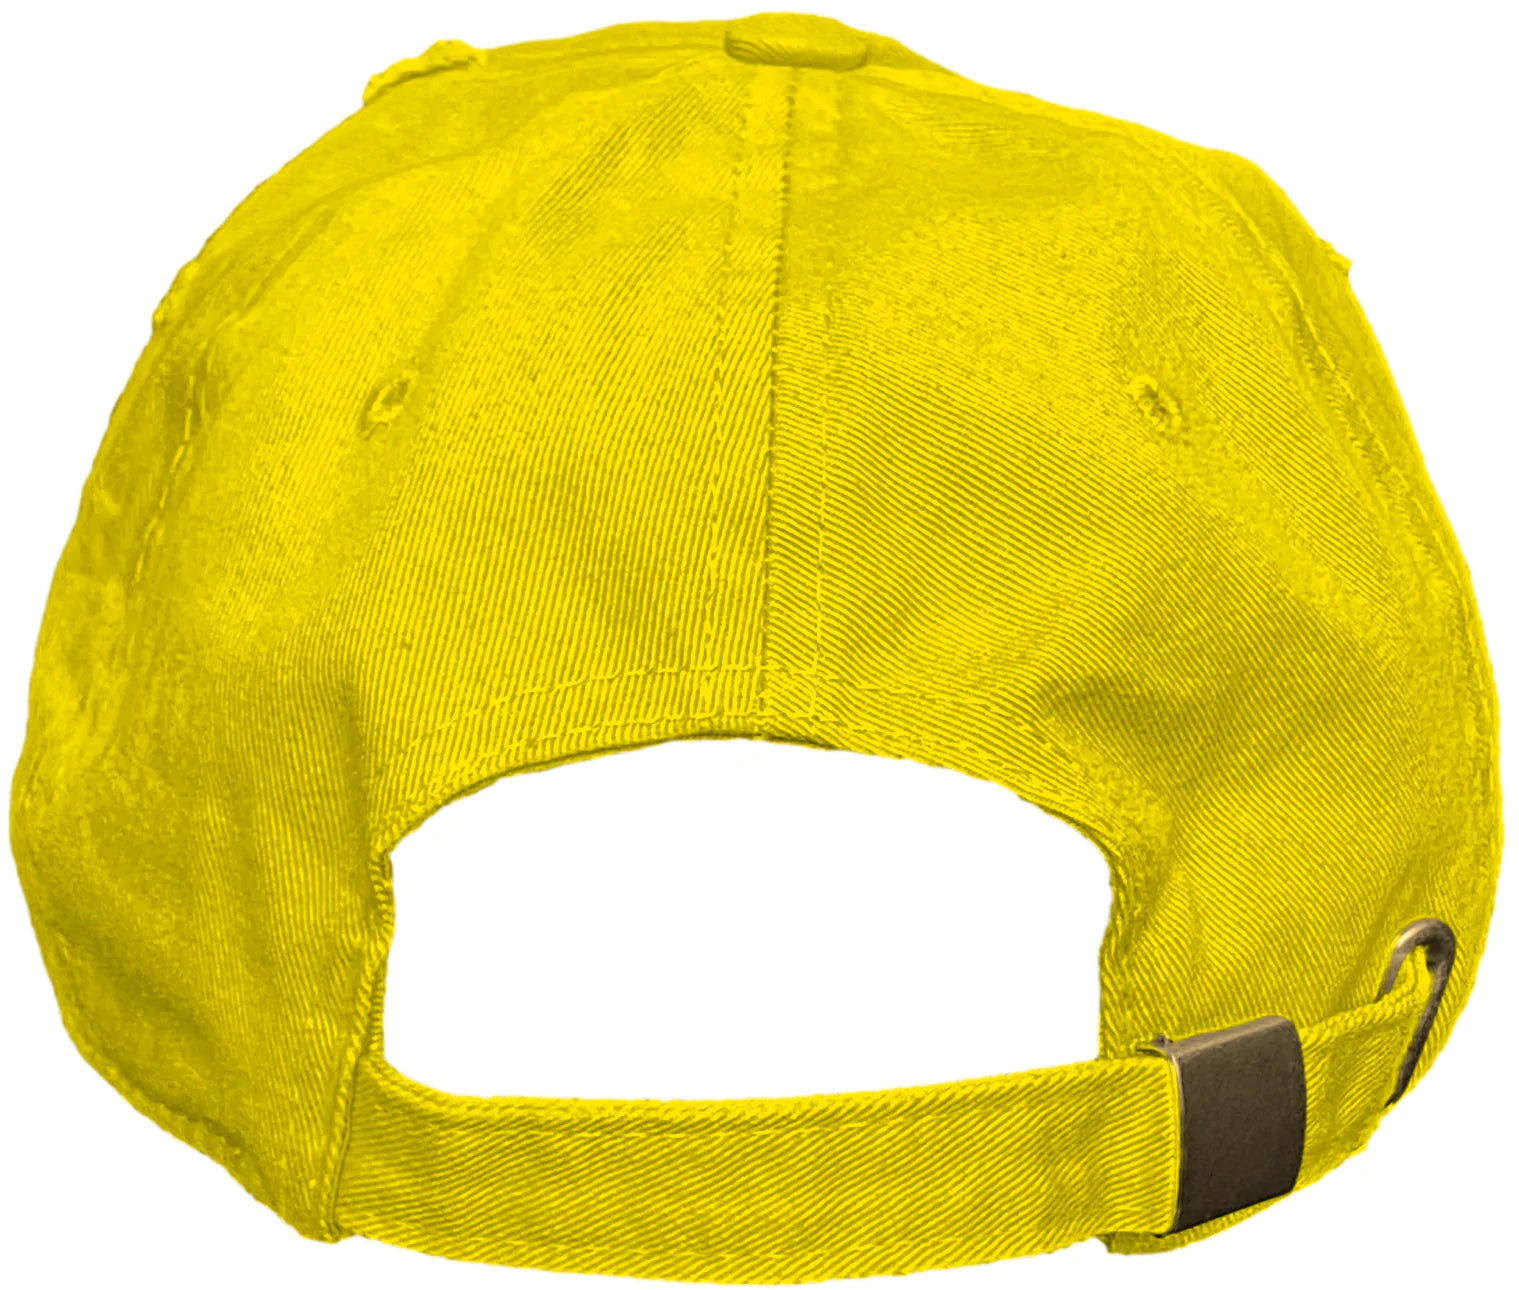 Jordan Retro 4 Thunder 4s Dad Hats : Yellow Hat to Match : Crazy Baws